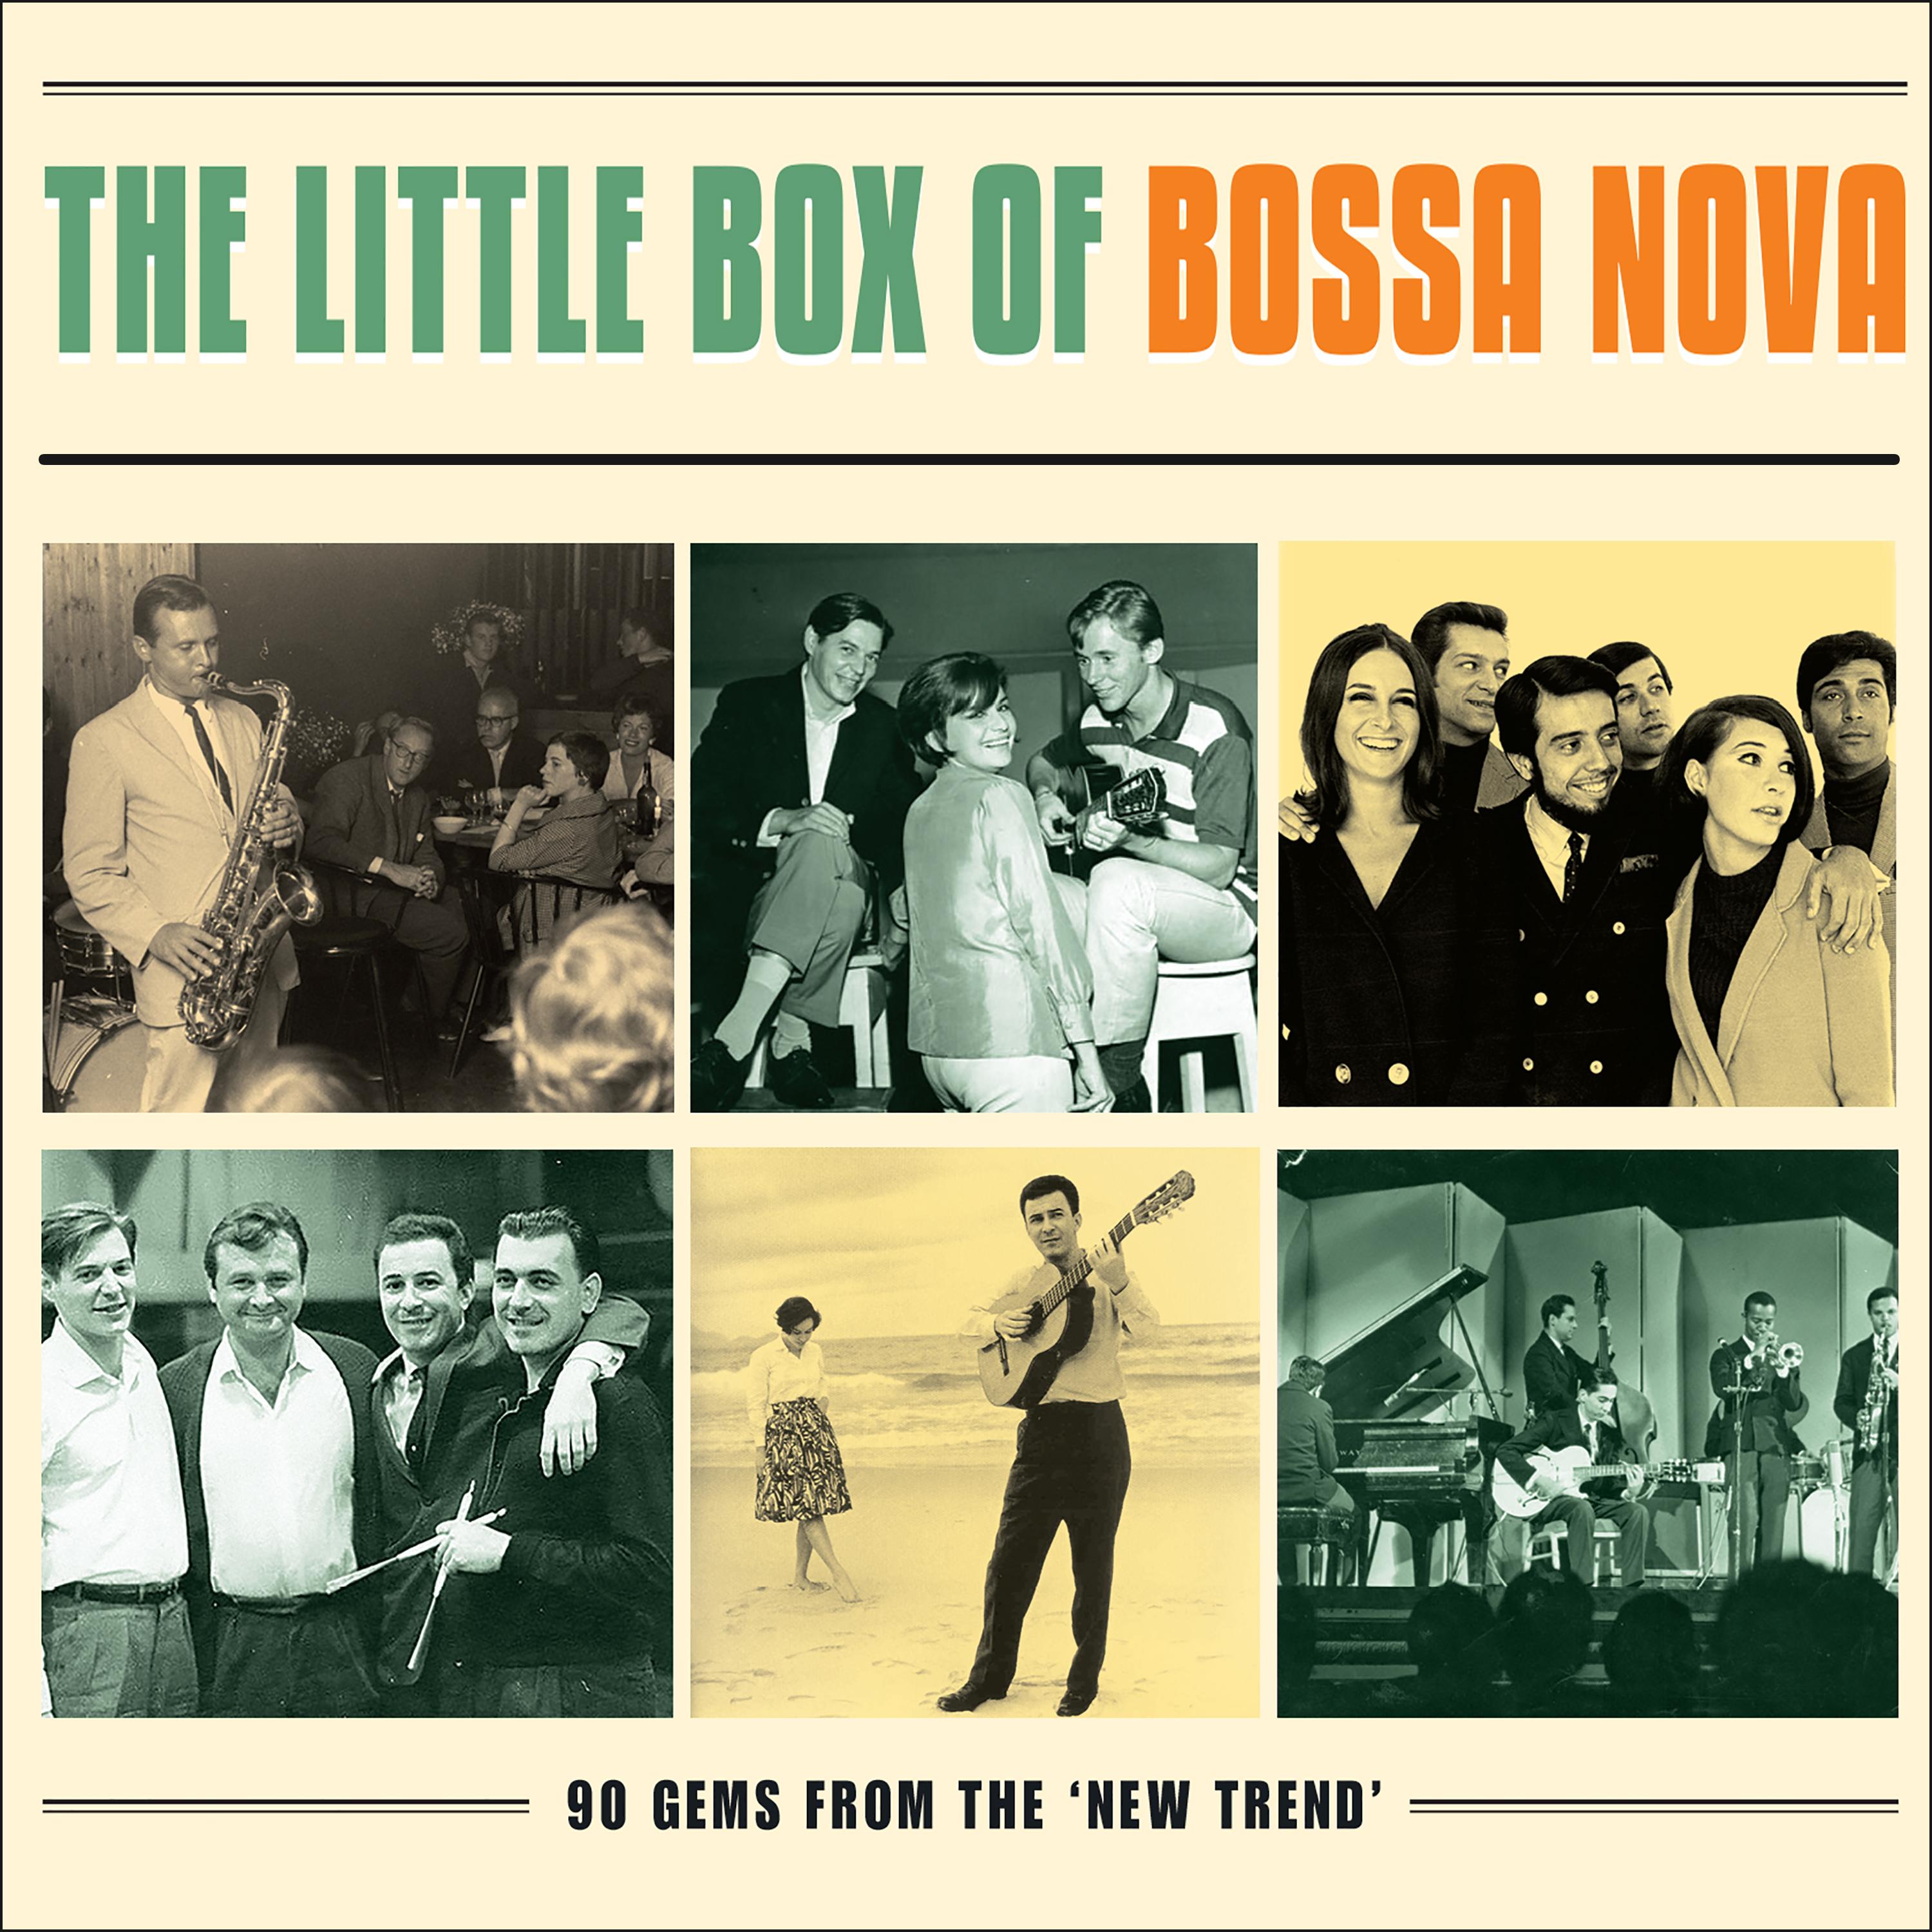 The Little Box of Bossa Nova